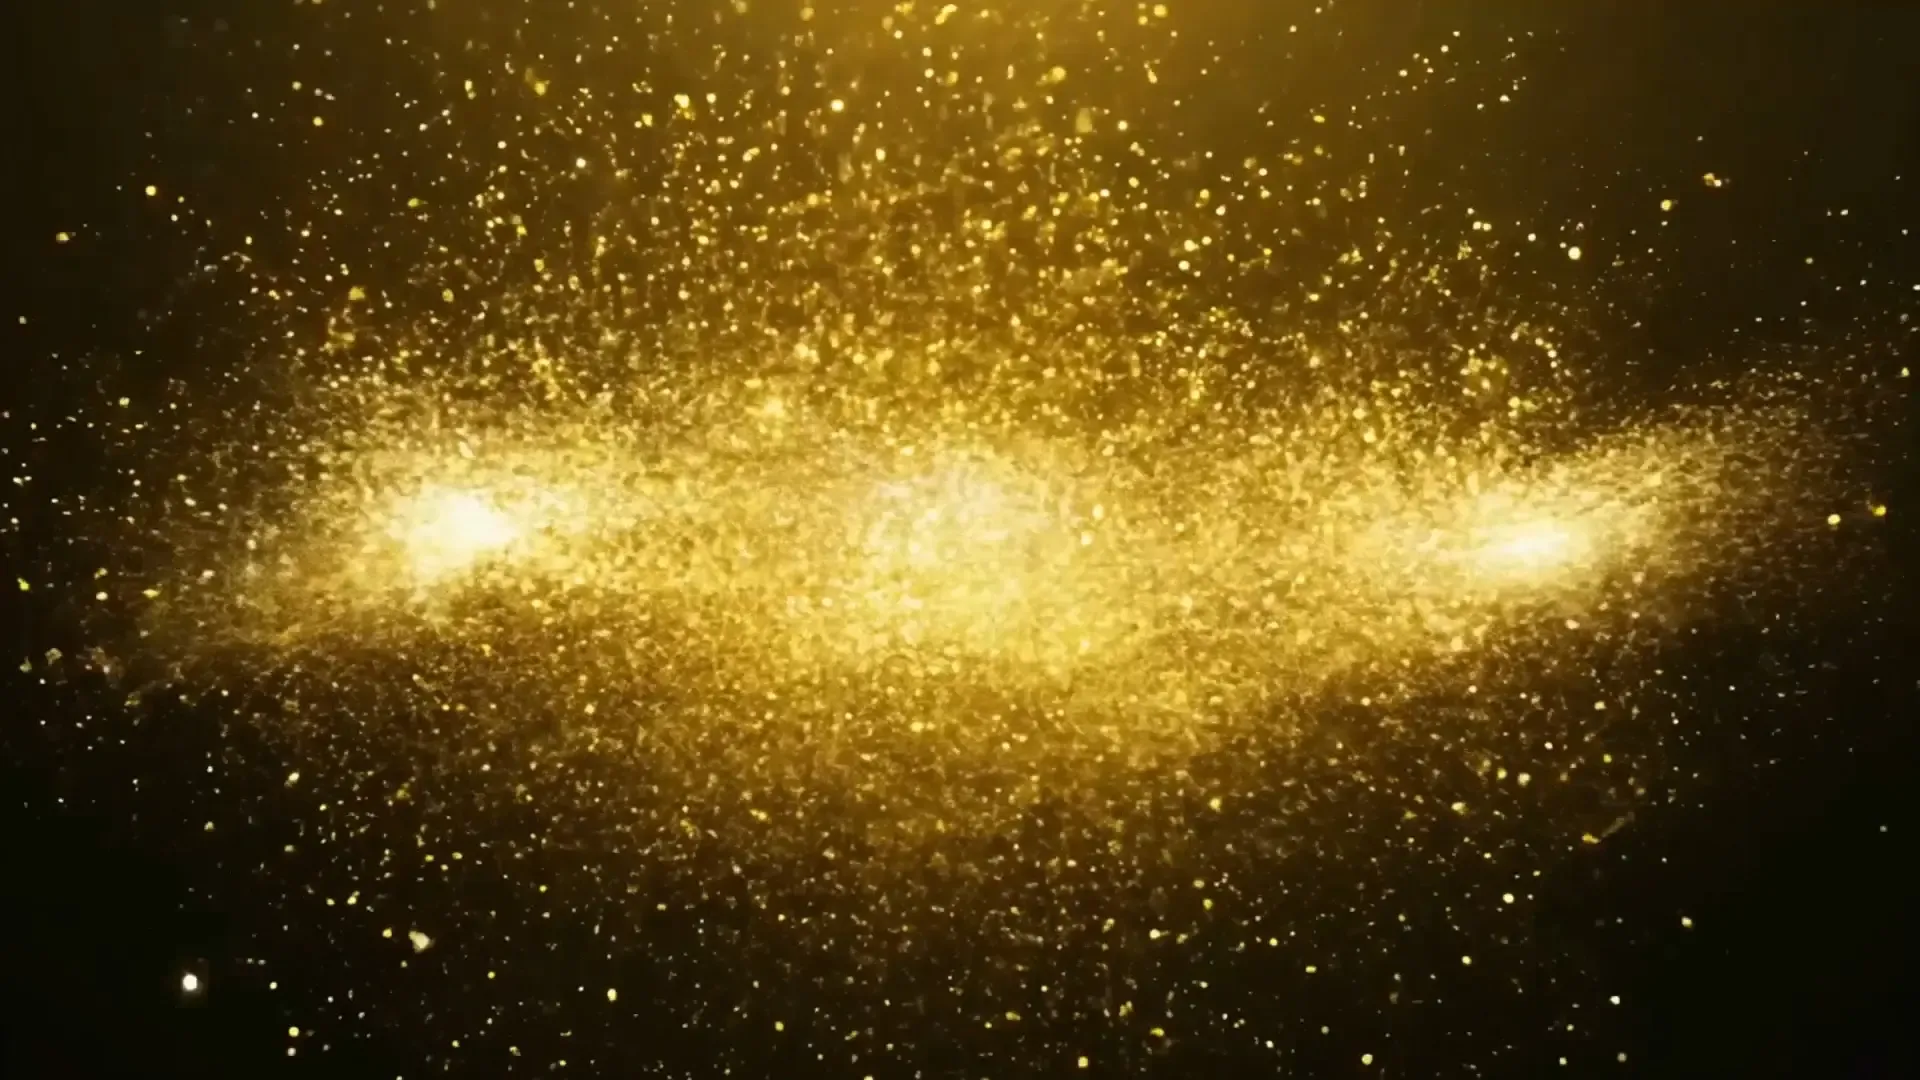 Golden Dust Overlay with Elegant Sparkle Effect